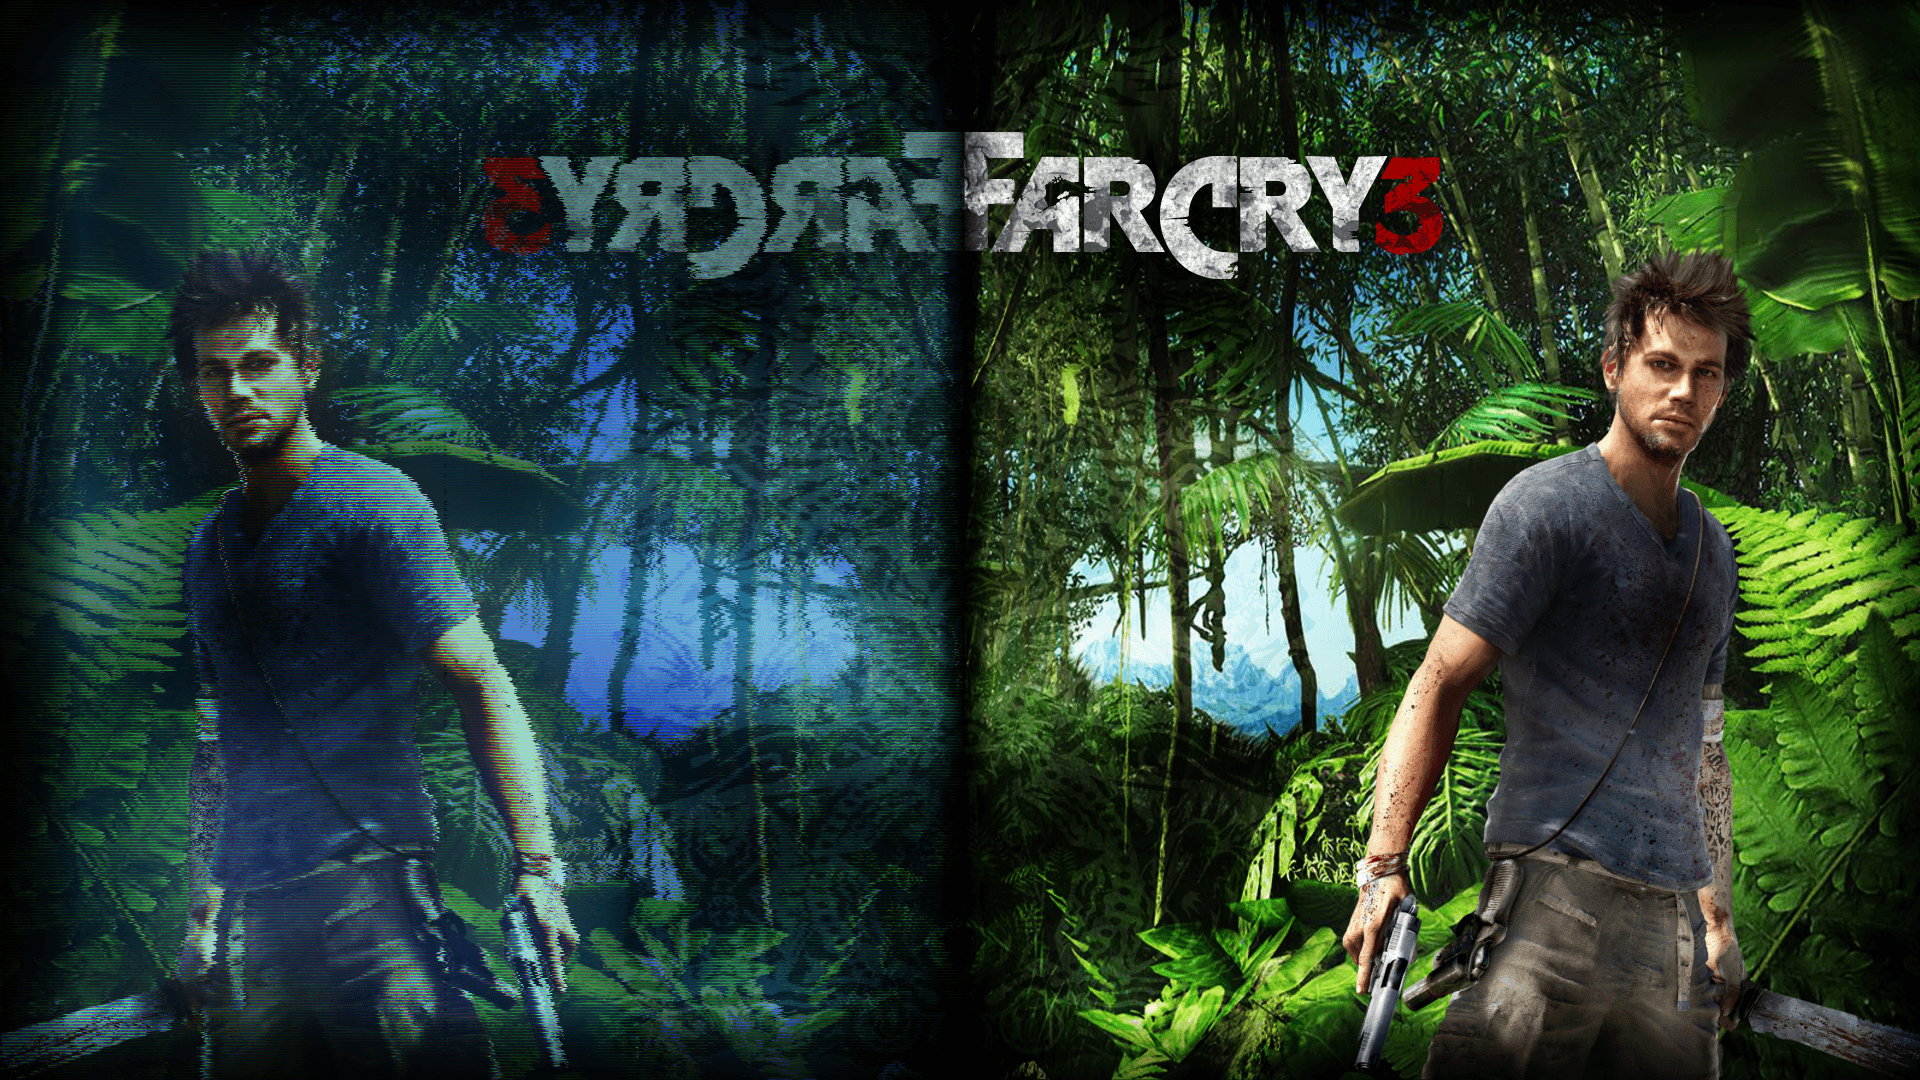 Made a Far Cry 3 Wallpaper